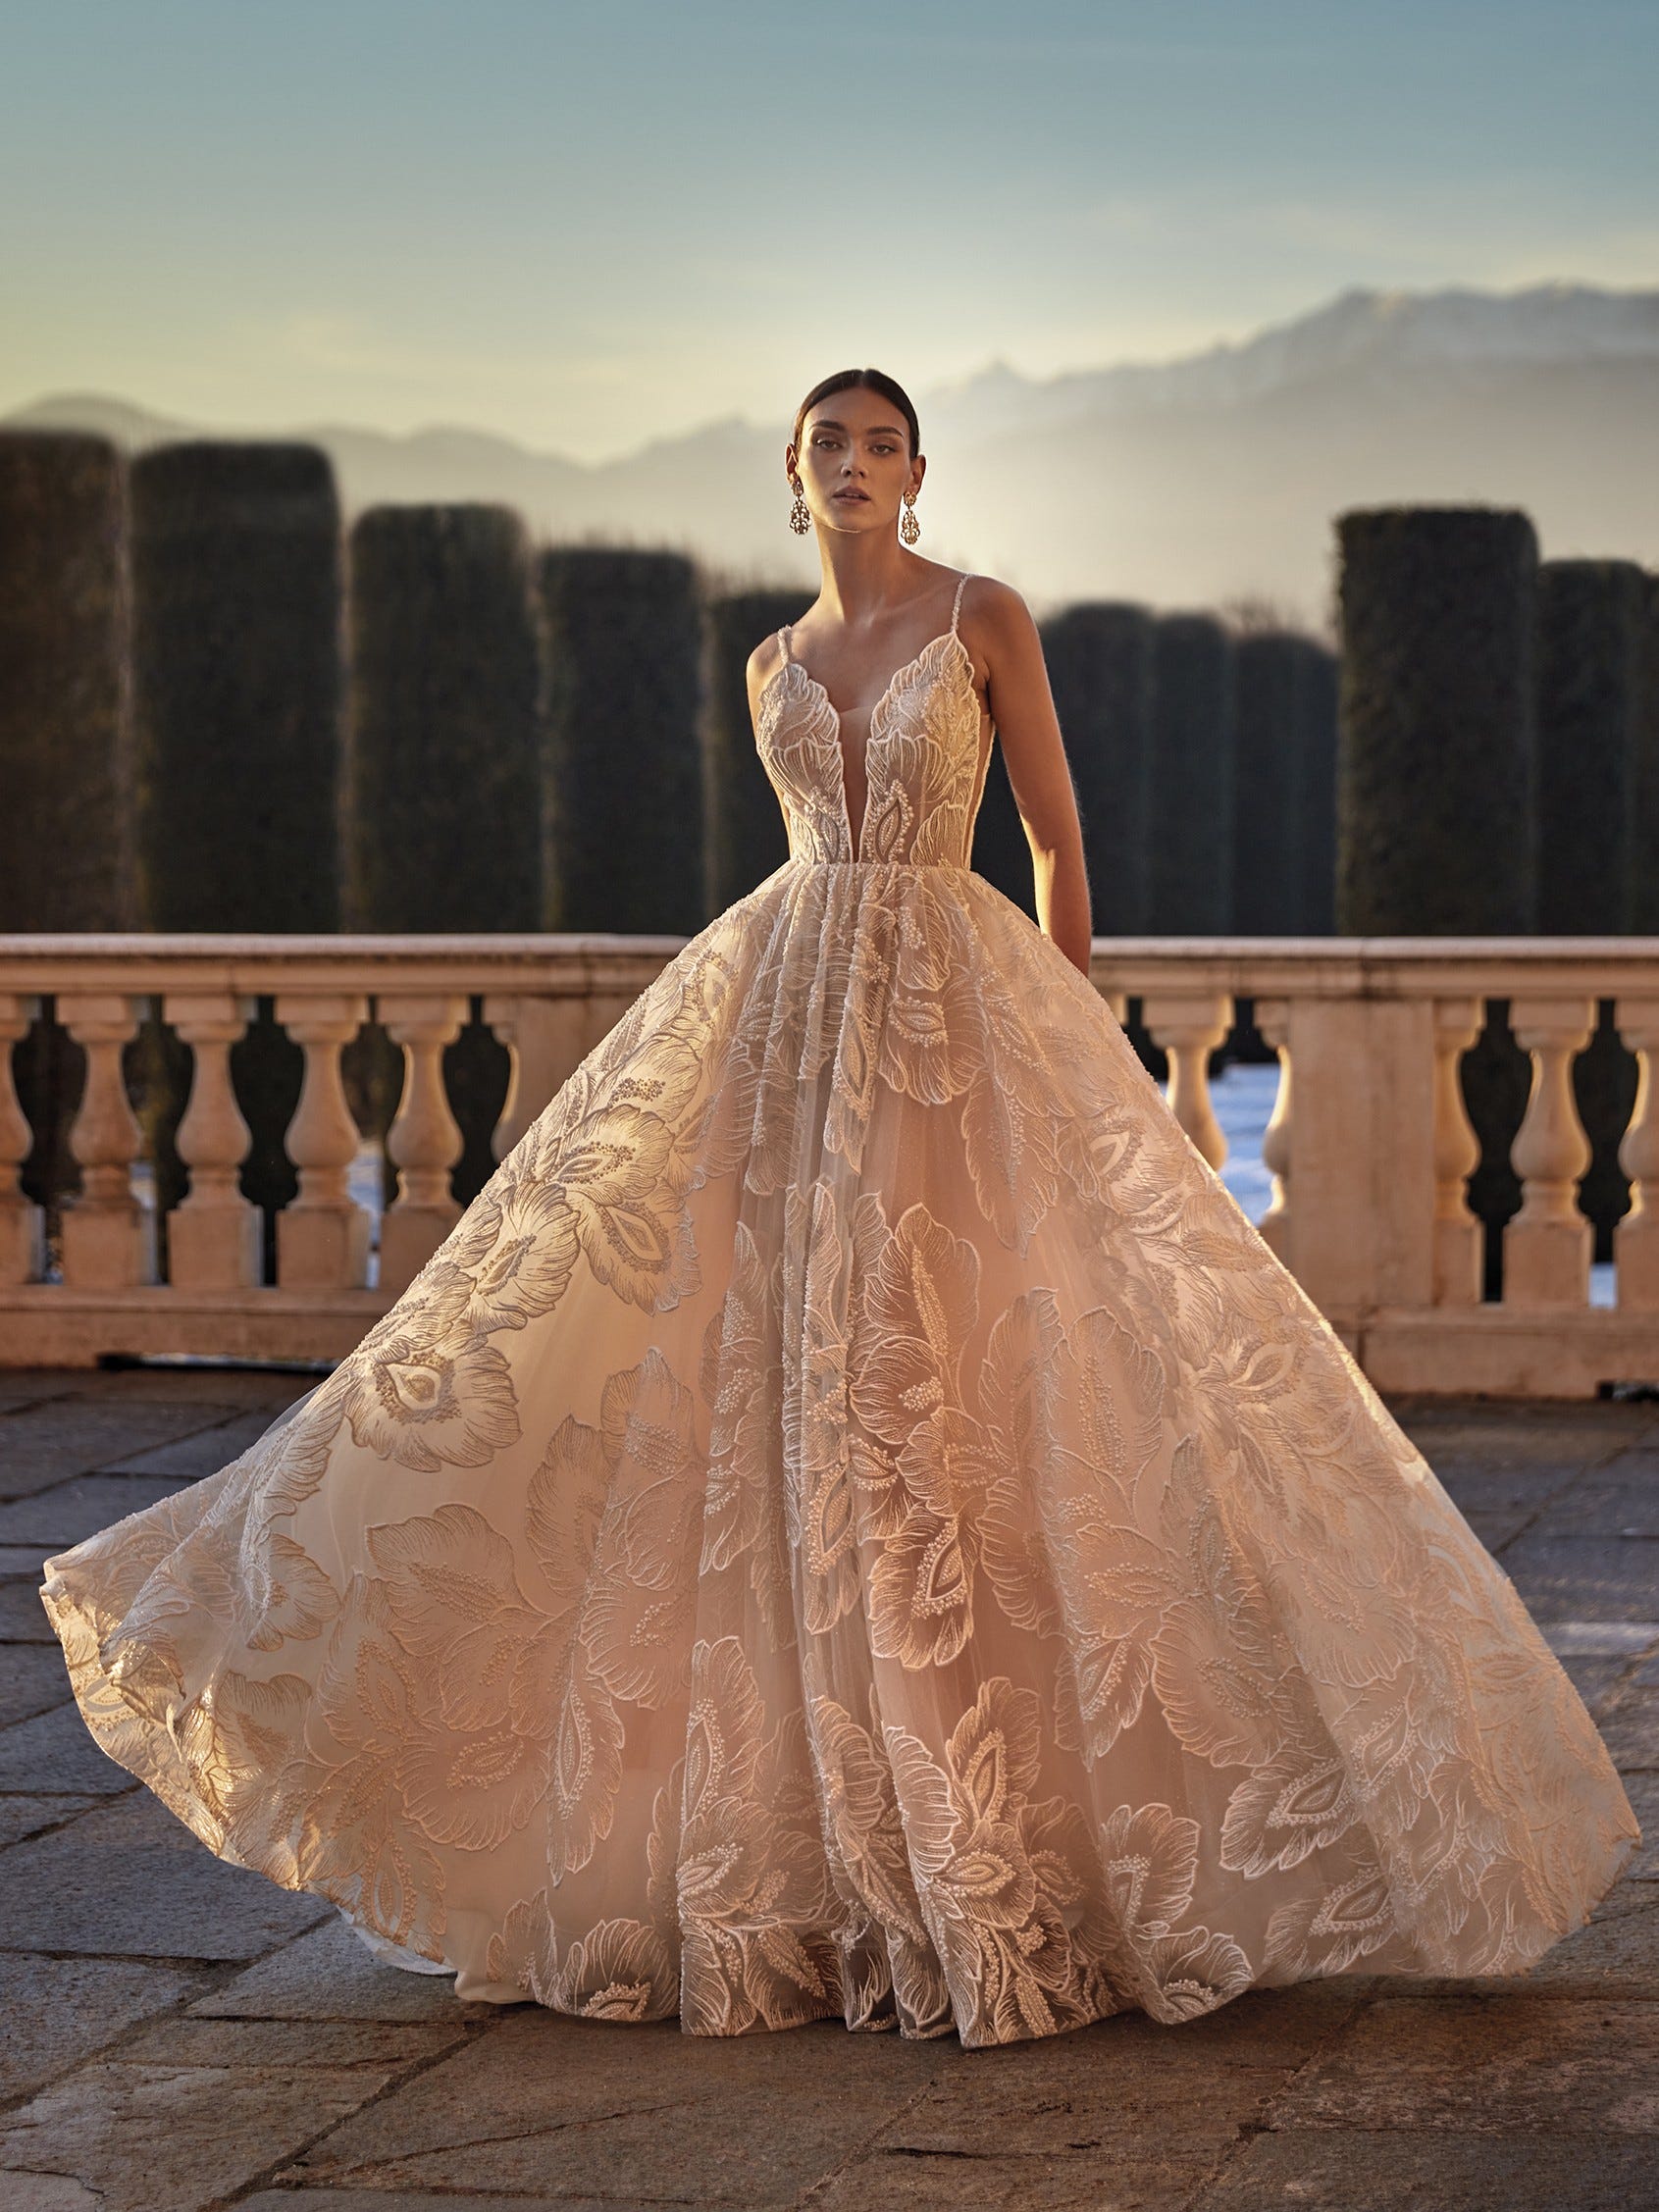 Pink Wedding Dress Plus Size Long Sleeve Ball Gown Bridal Dress